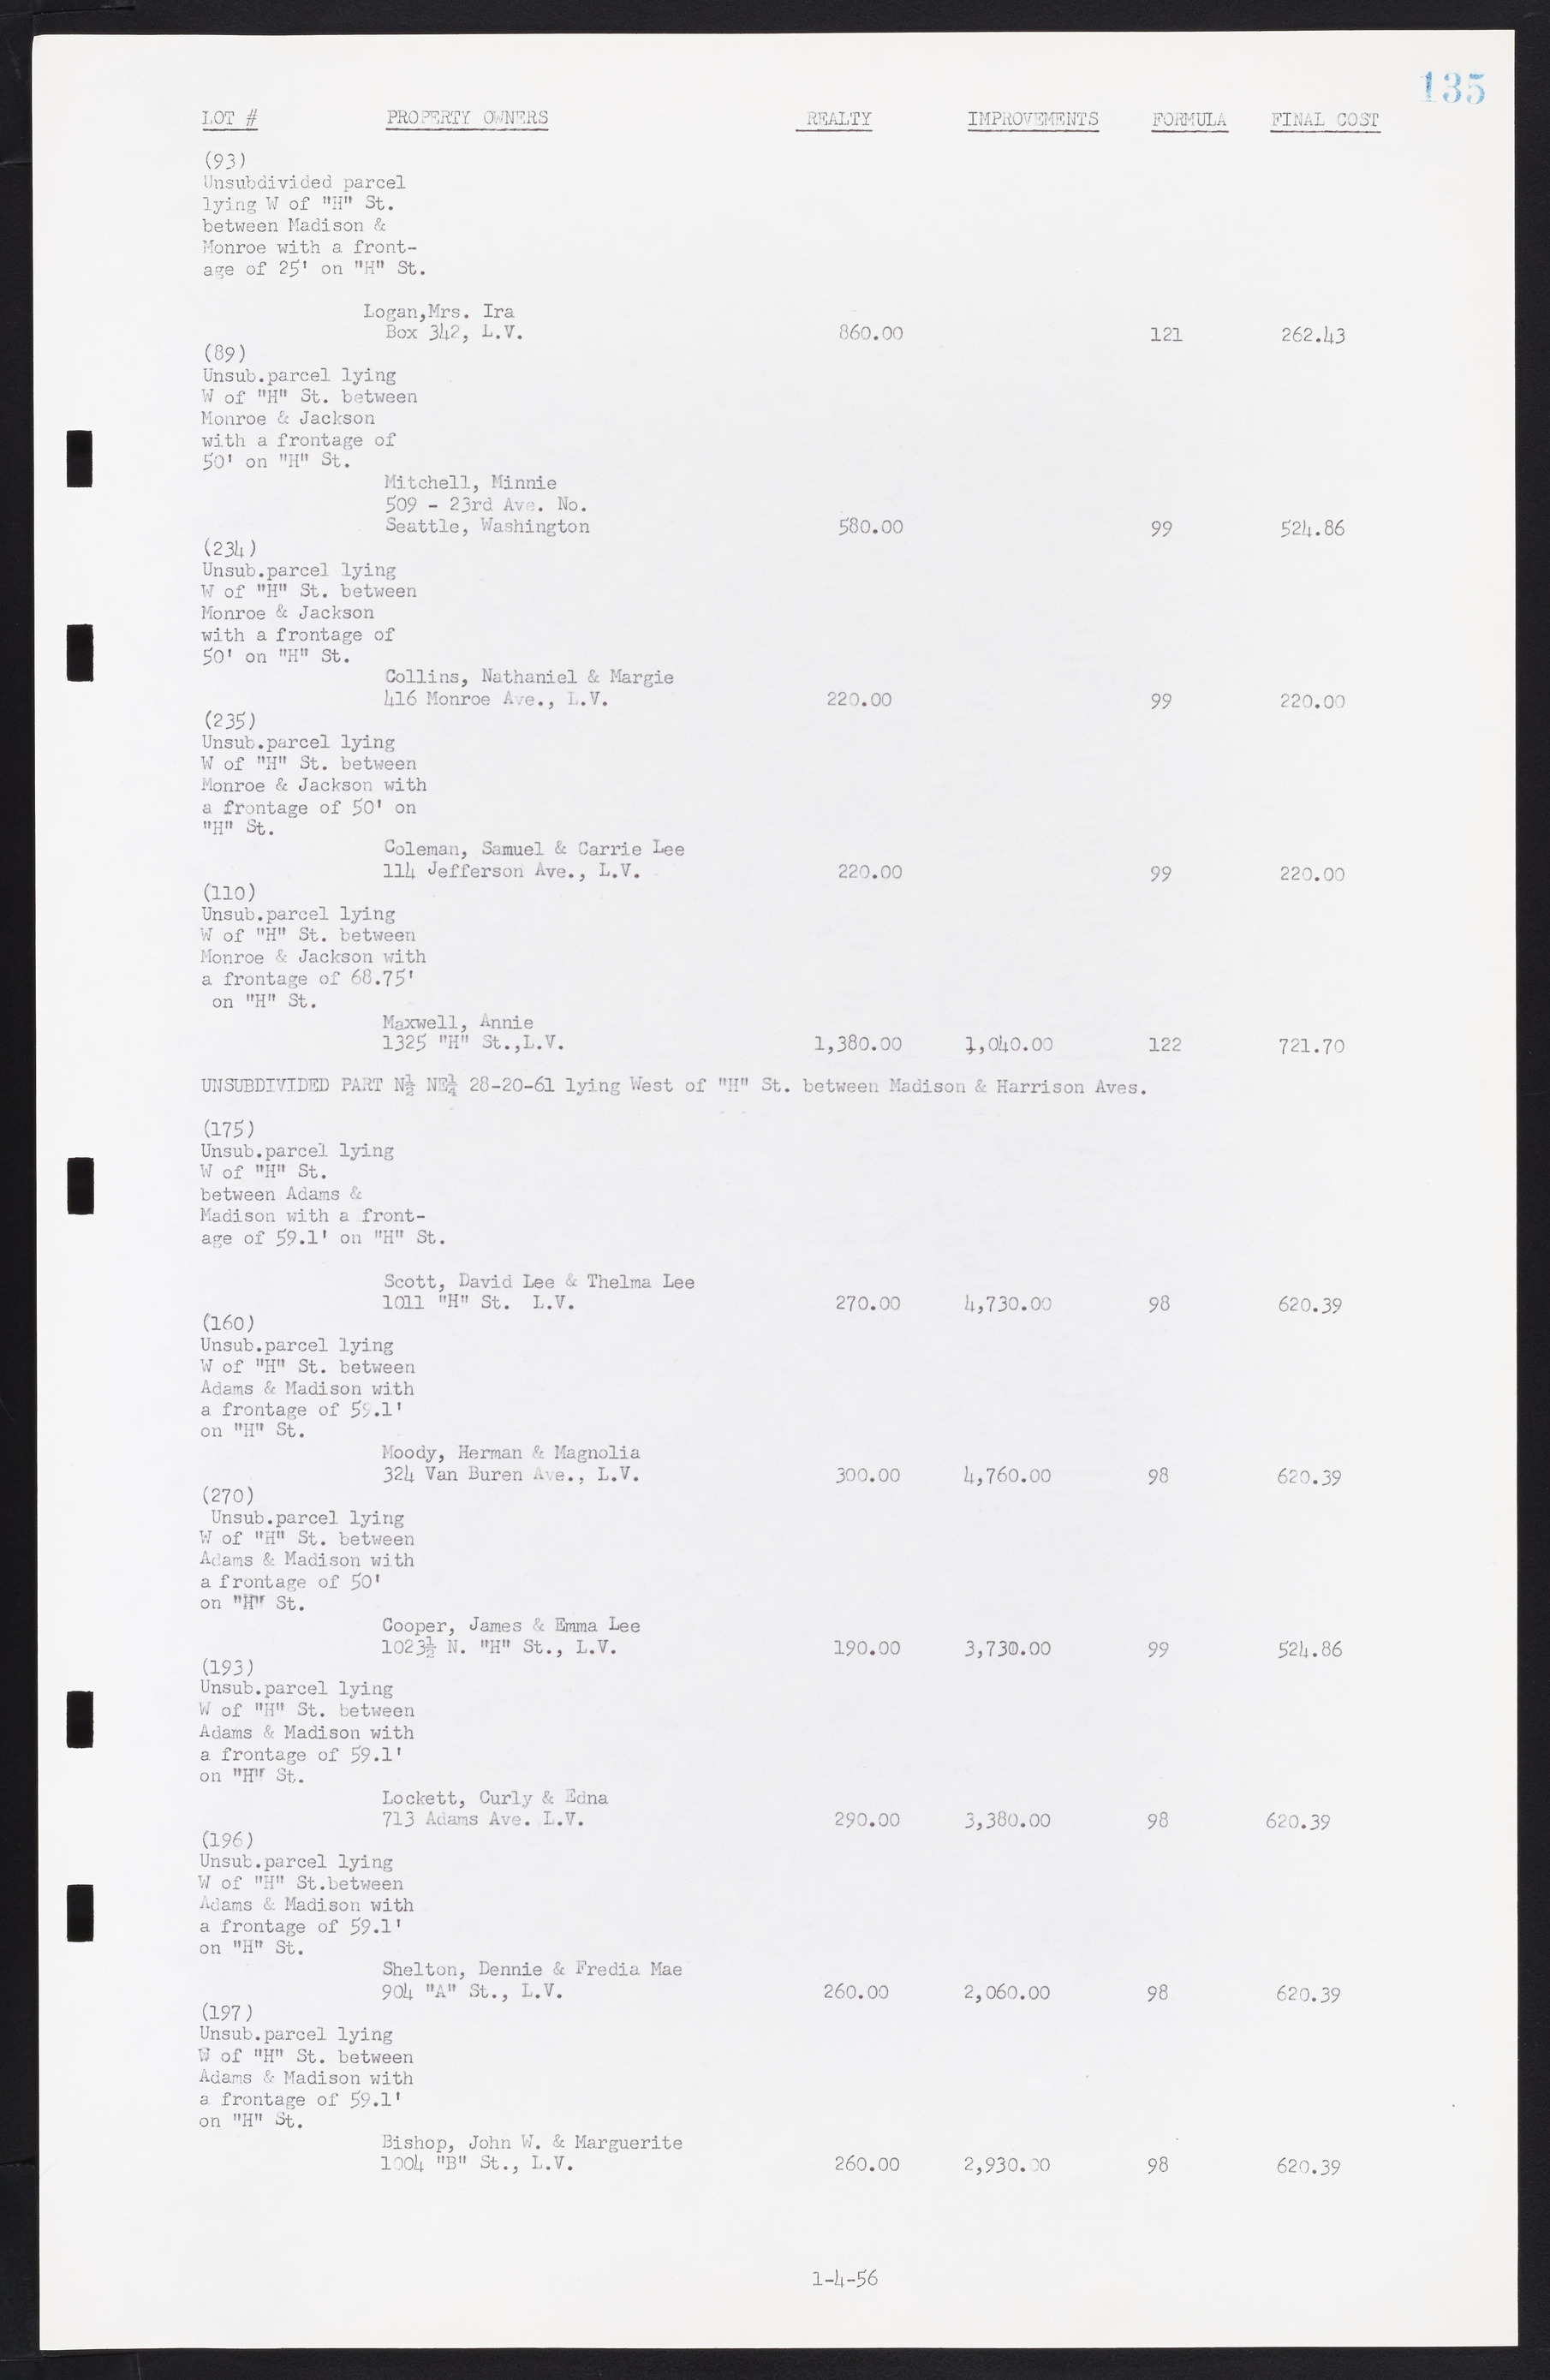 Las Vegas City Commission Minutes, September 21, 1955 to November 20, 1957, lvc000010-145